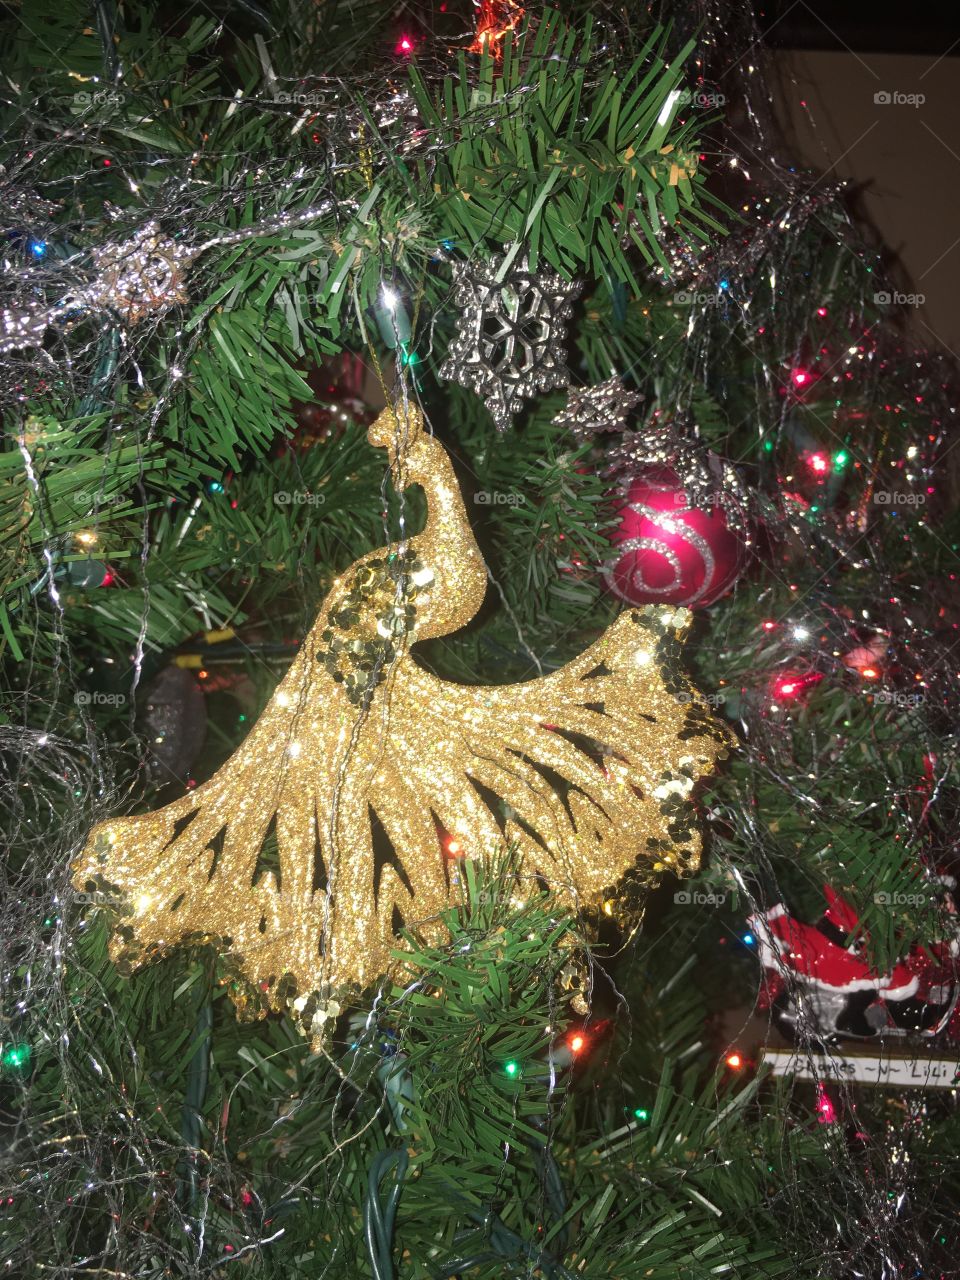 Peacock ornament